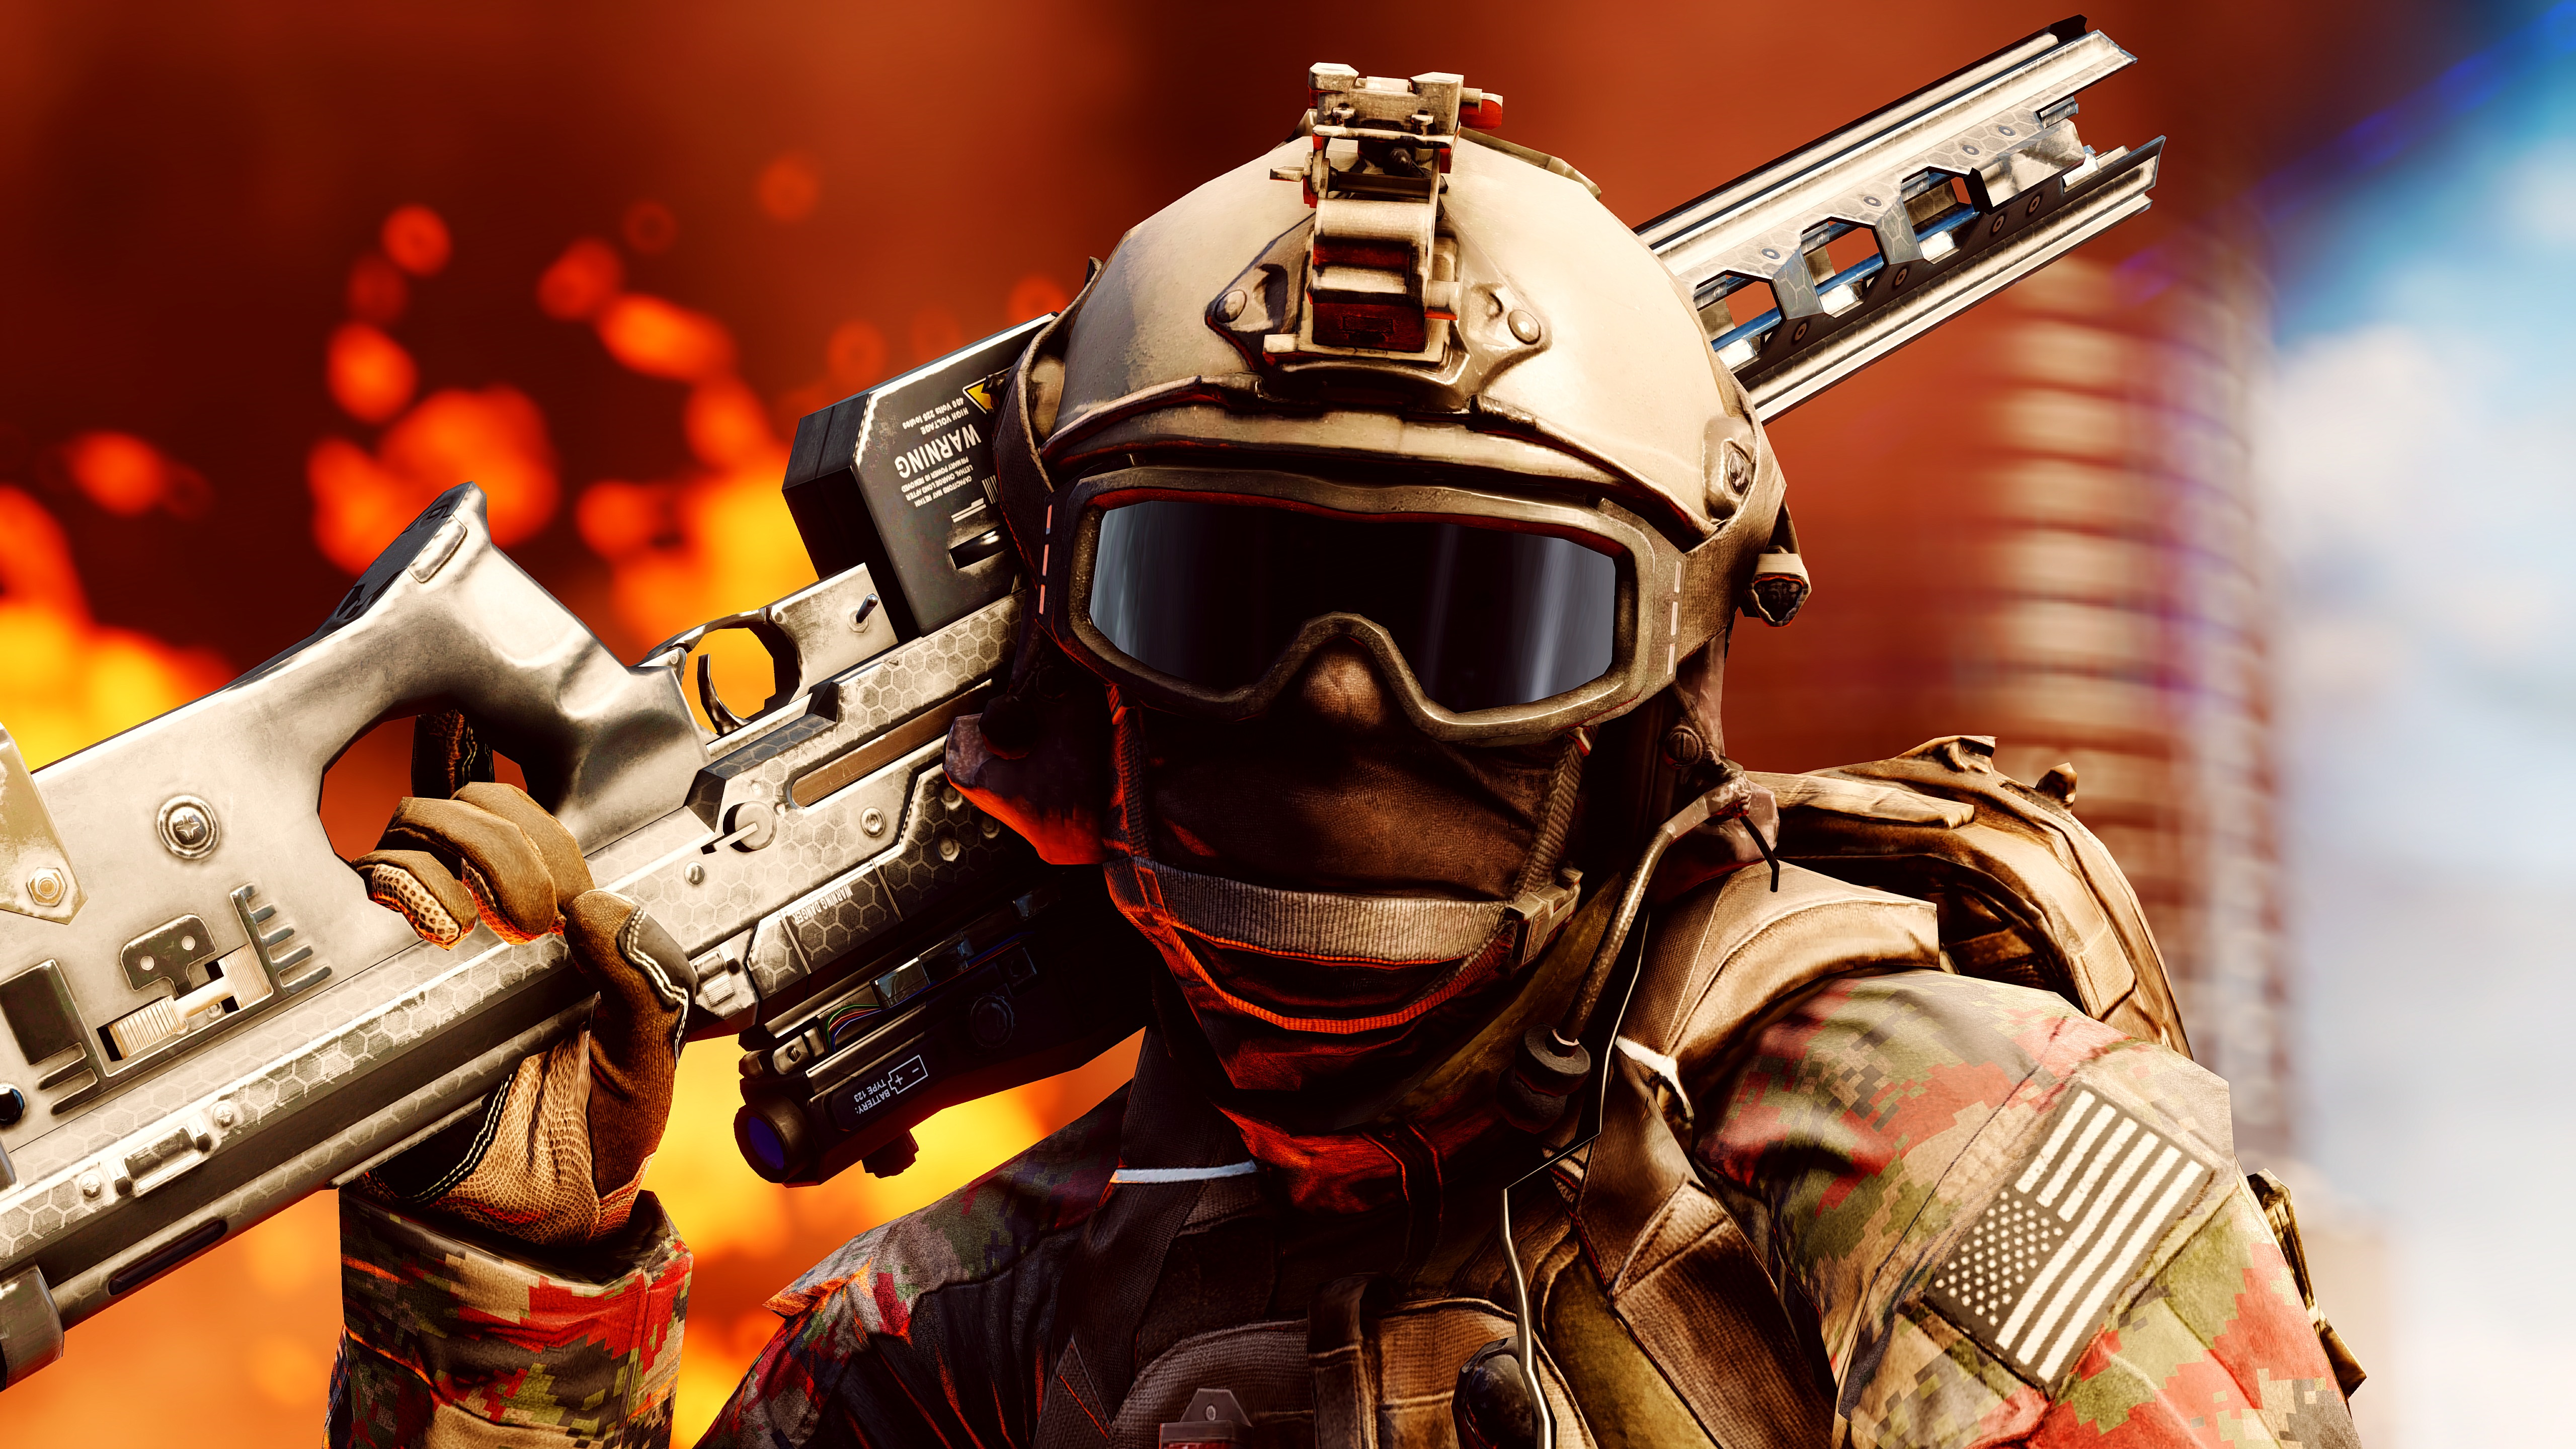 HD desktop wallpaper: Weapon, Battlefield, Soldier, Video Game, Battlefield  4 download free picture #385768